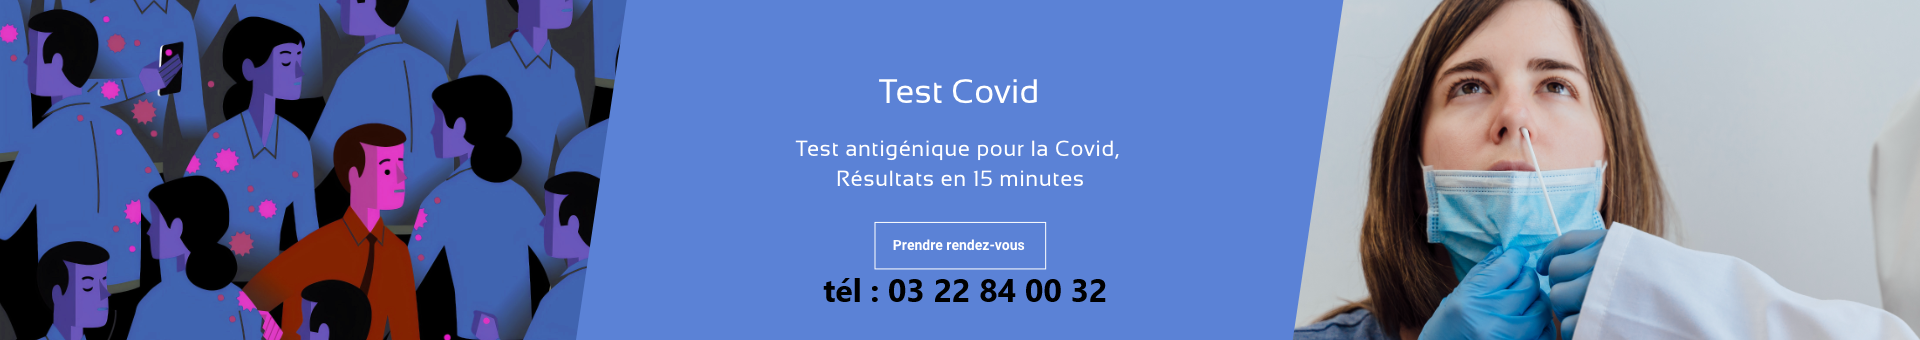 Test Covid